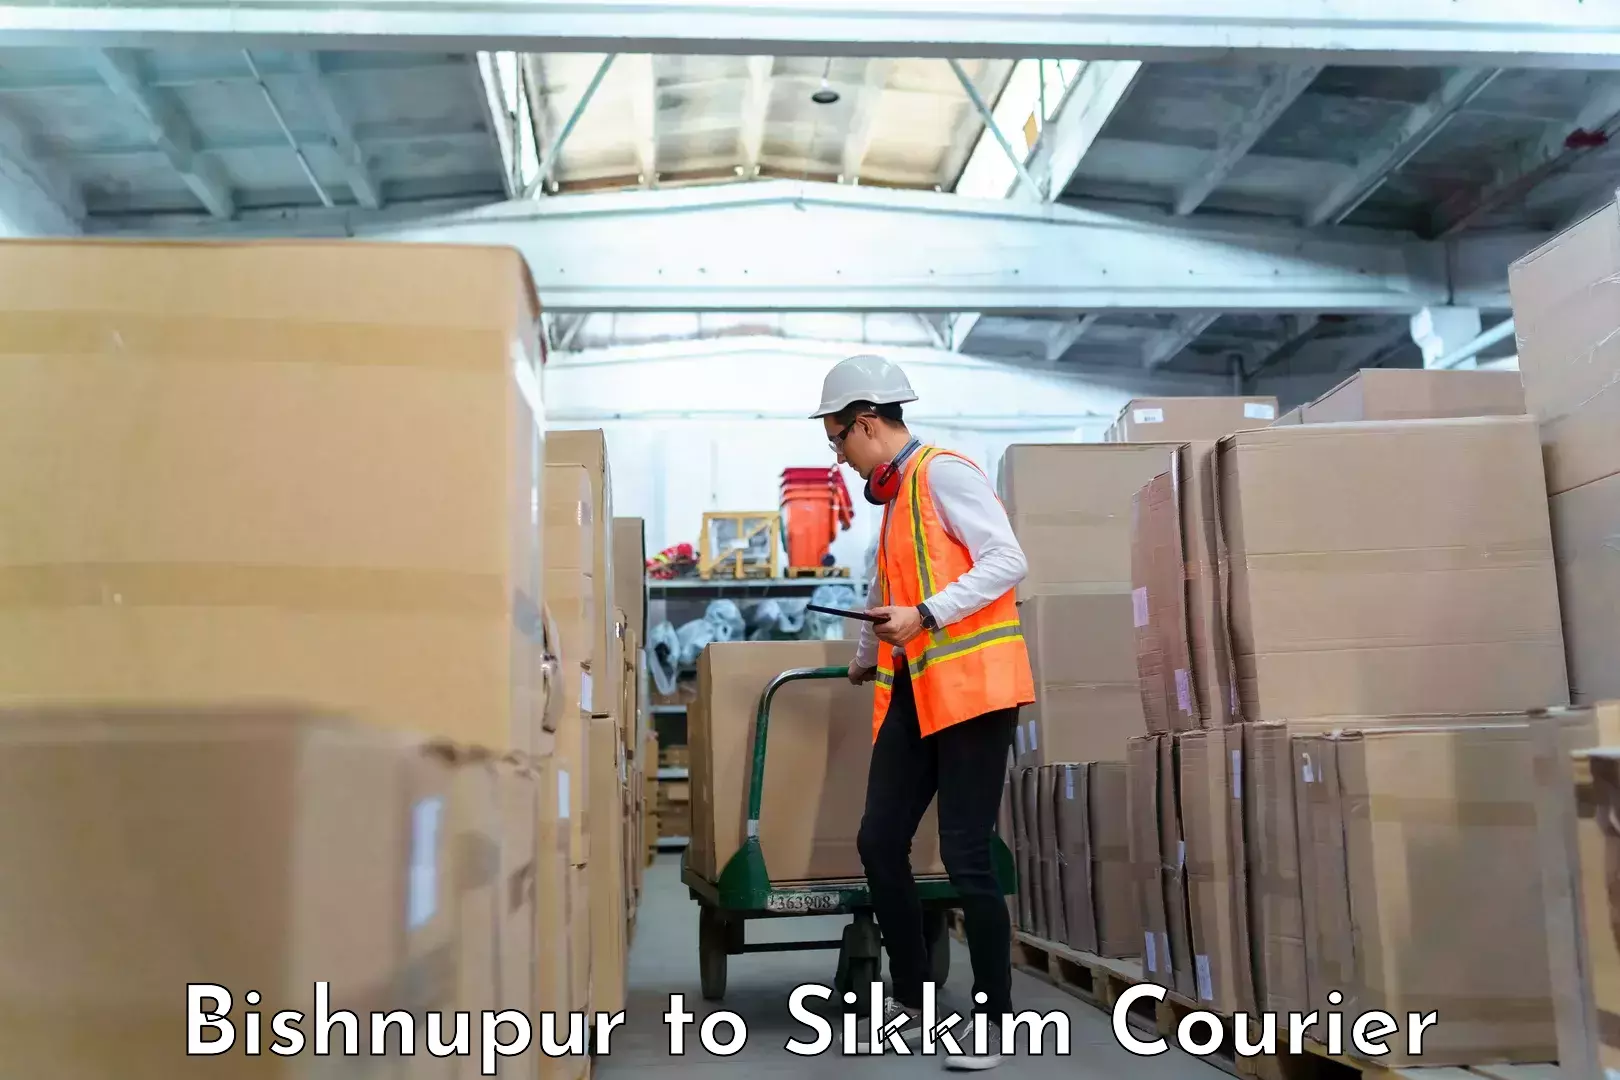 Luggage shipment specialists Bishnupur to Sikkim